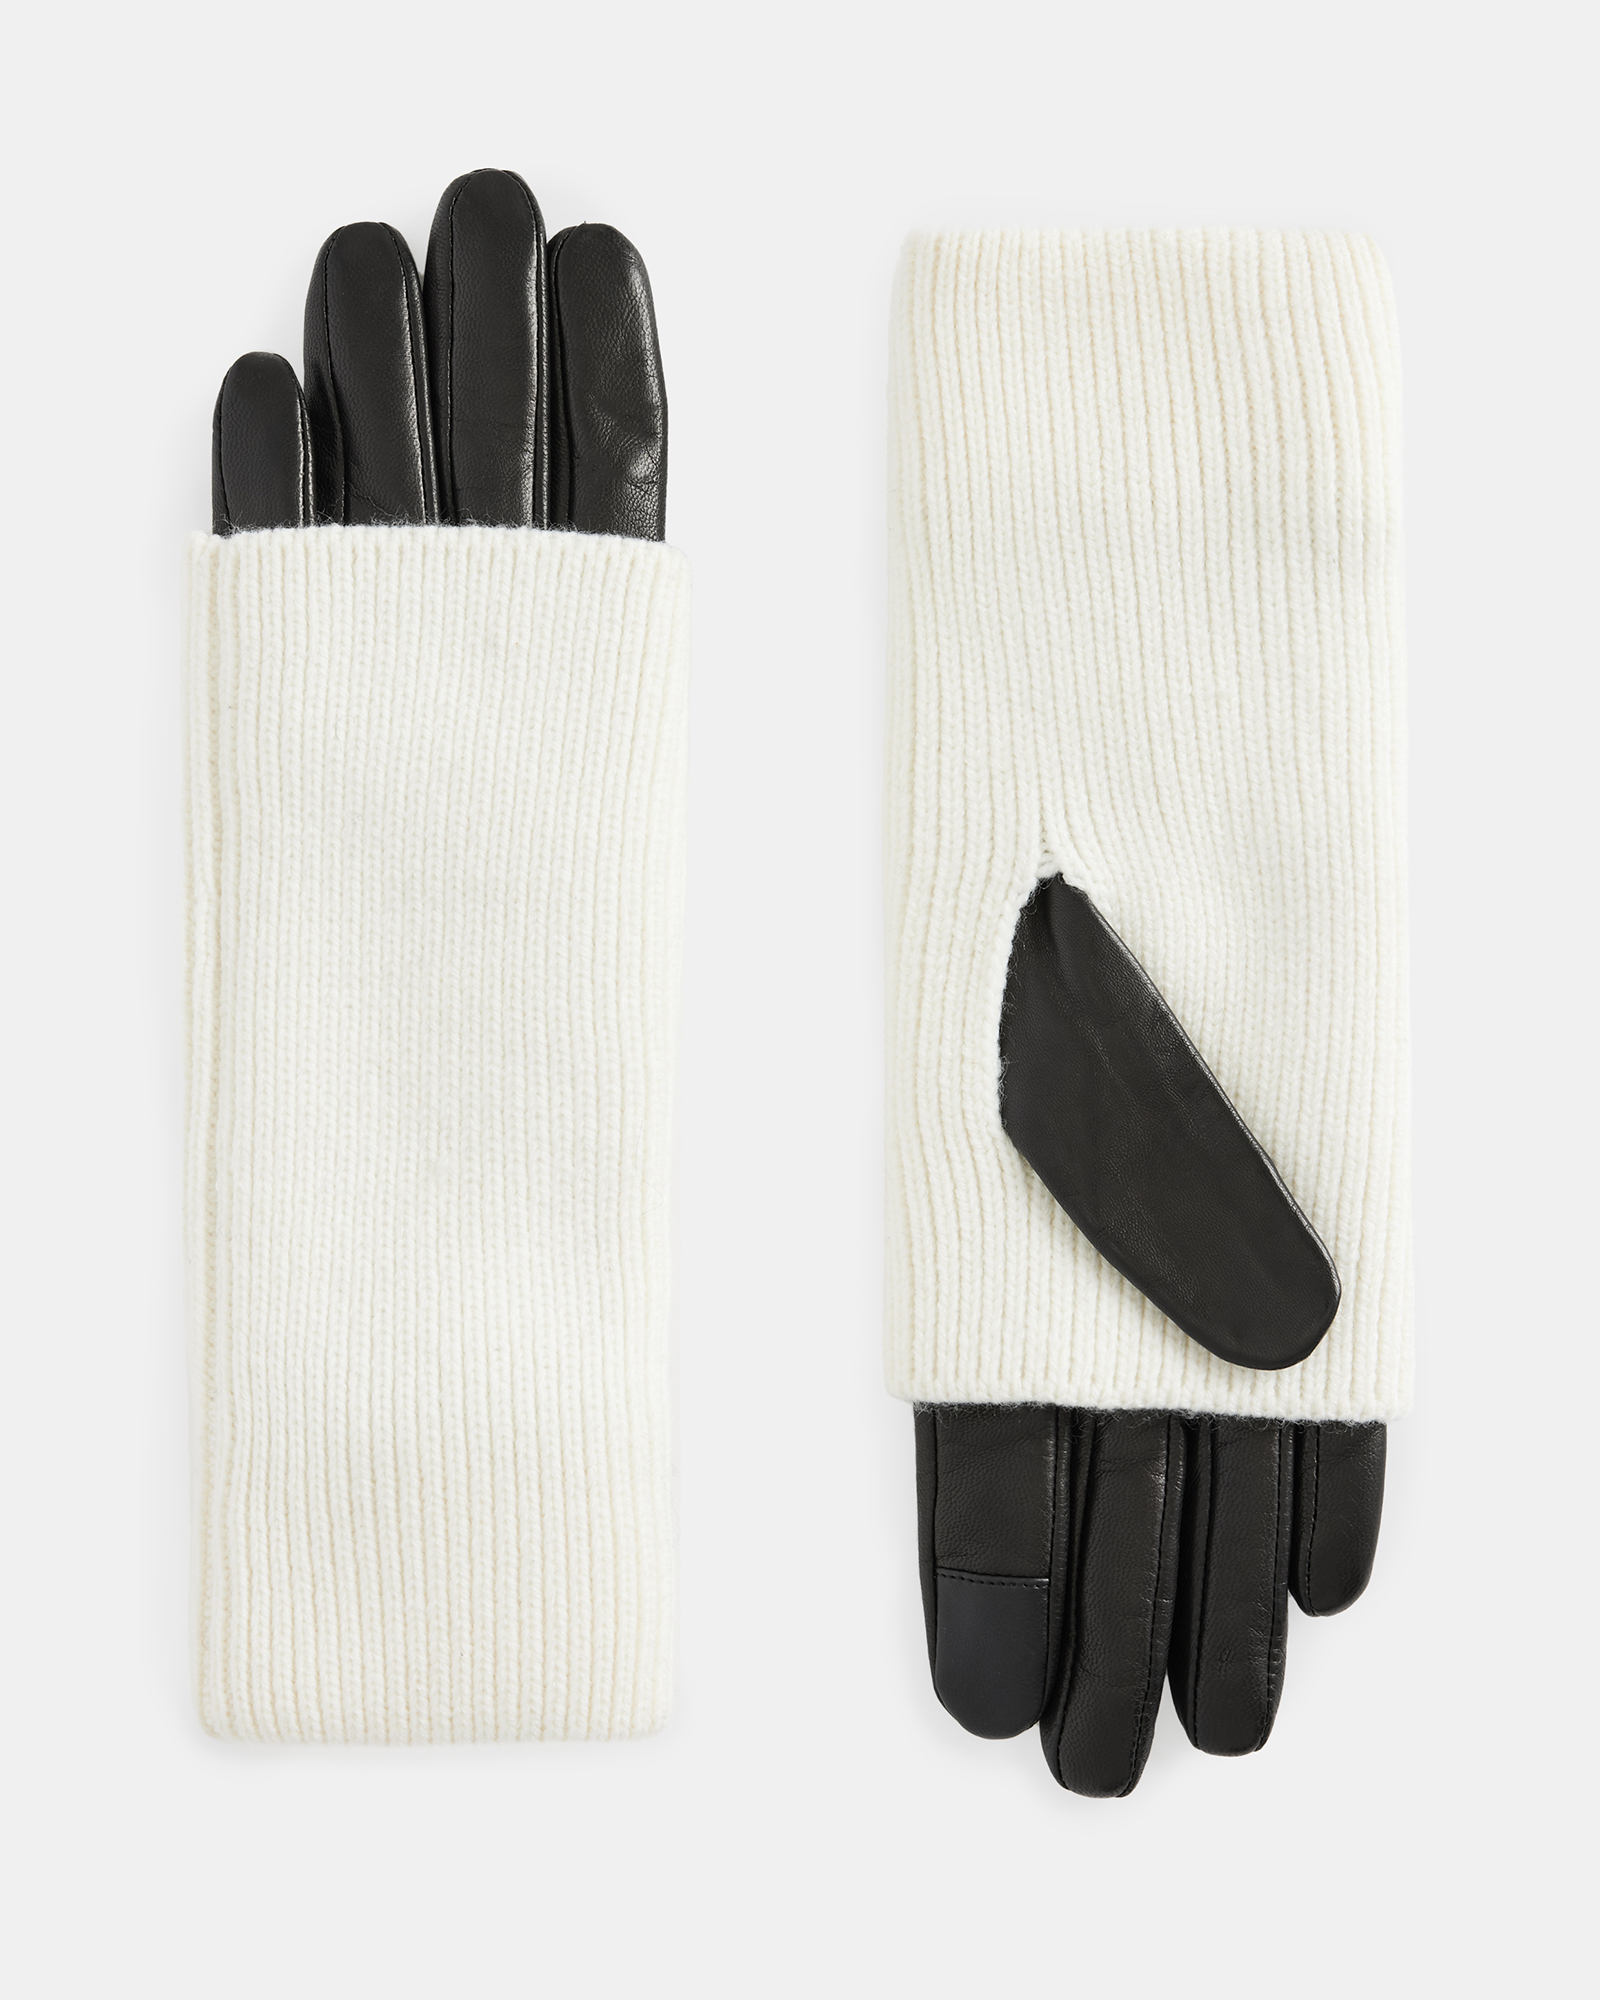 US Zoya ALLSAINTS | Cuff Gloves Chalk White Knit Leather Extendable